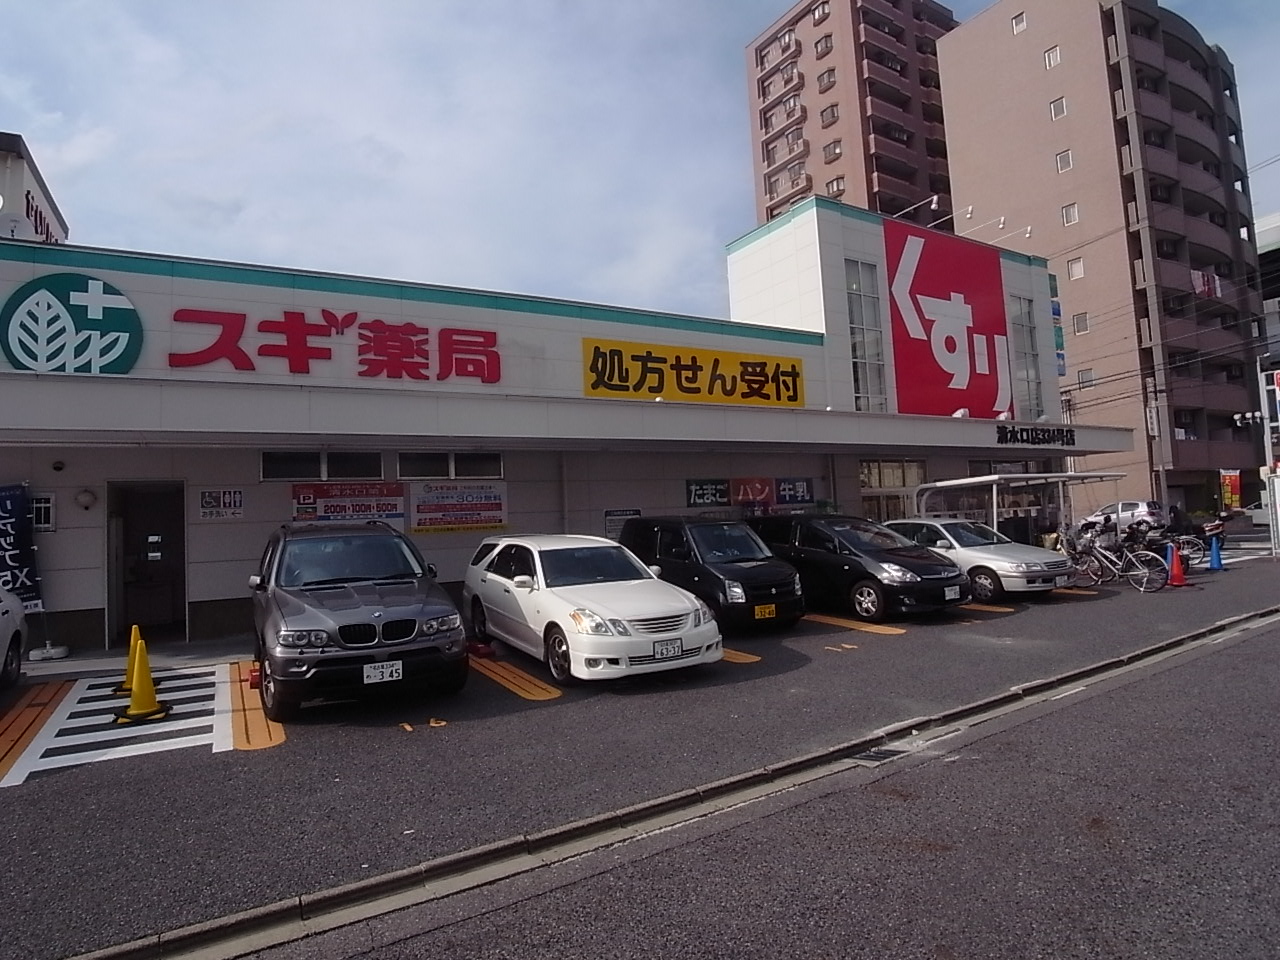 Dorakkusutoa. Cedar pharmacy Shimizuguchi shop 389m until (drugstore)